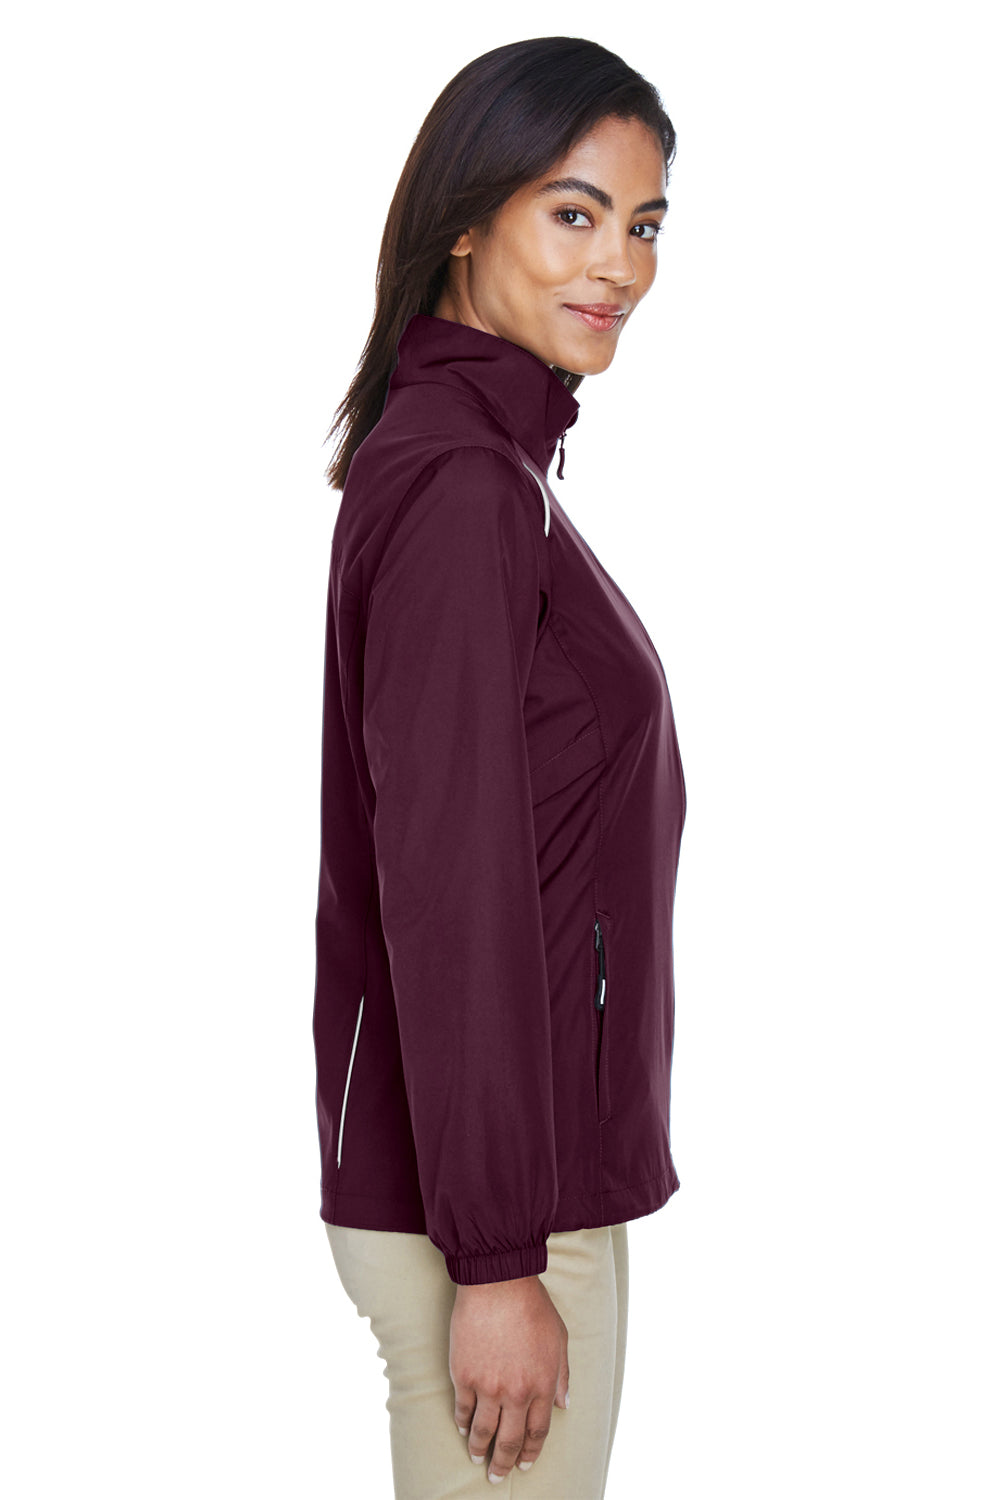 Core 365 78183 Womens Motivate Water Resistant Full Zip Jacket Burgundy Side